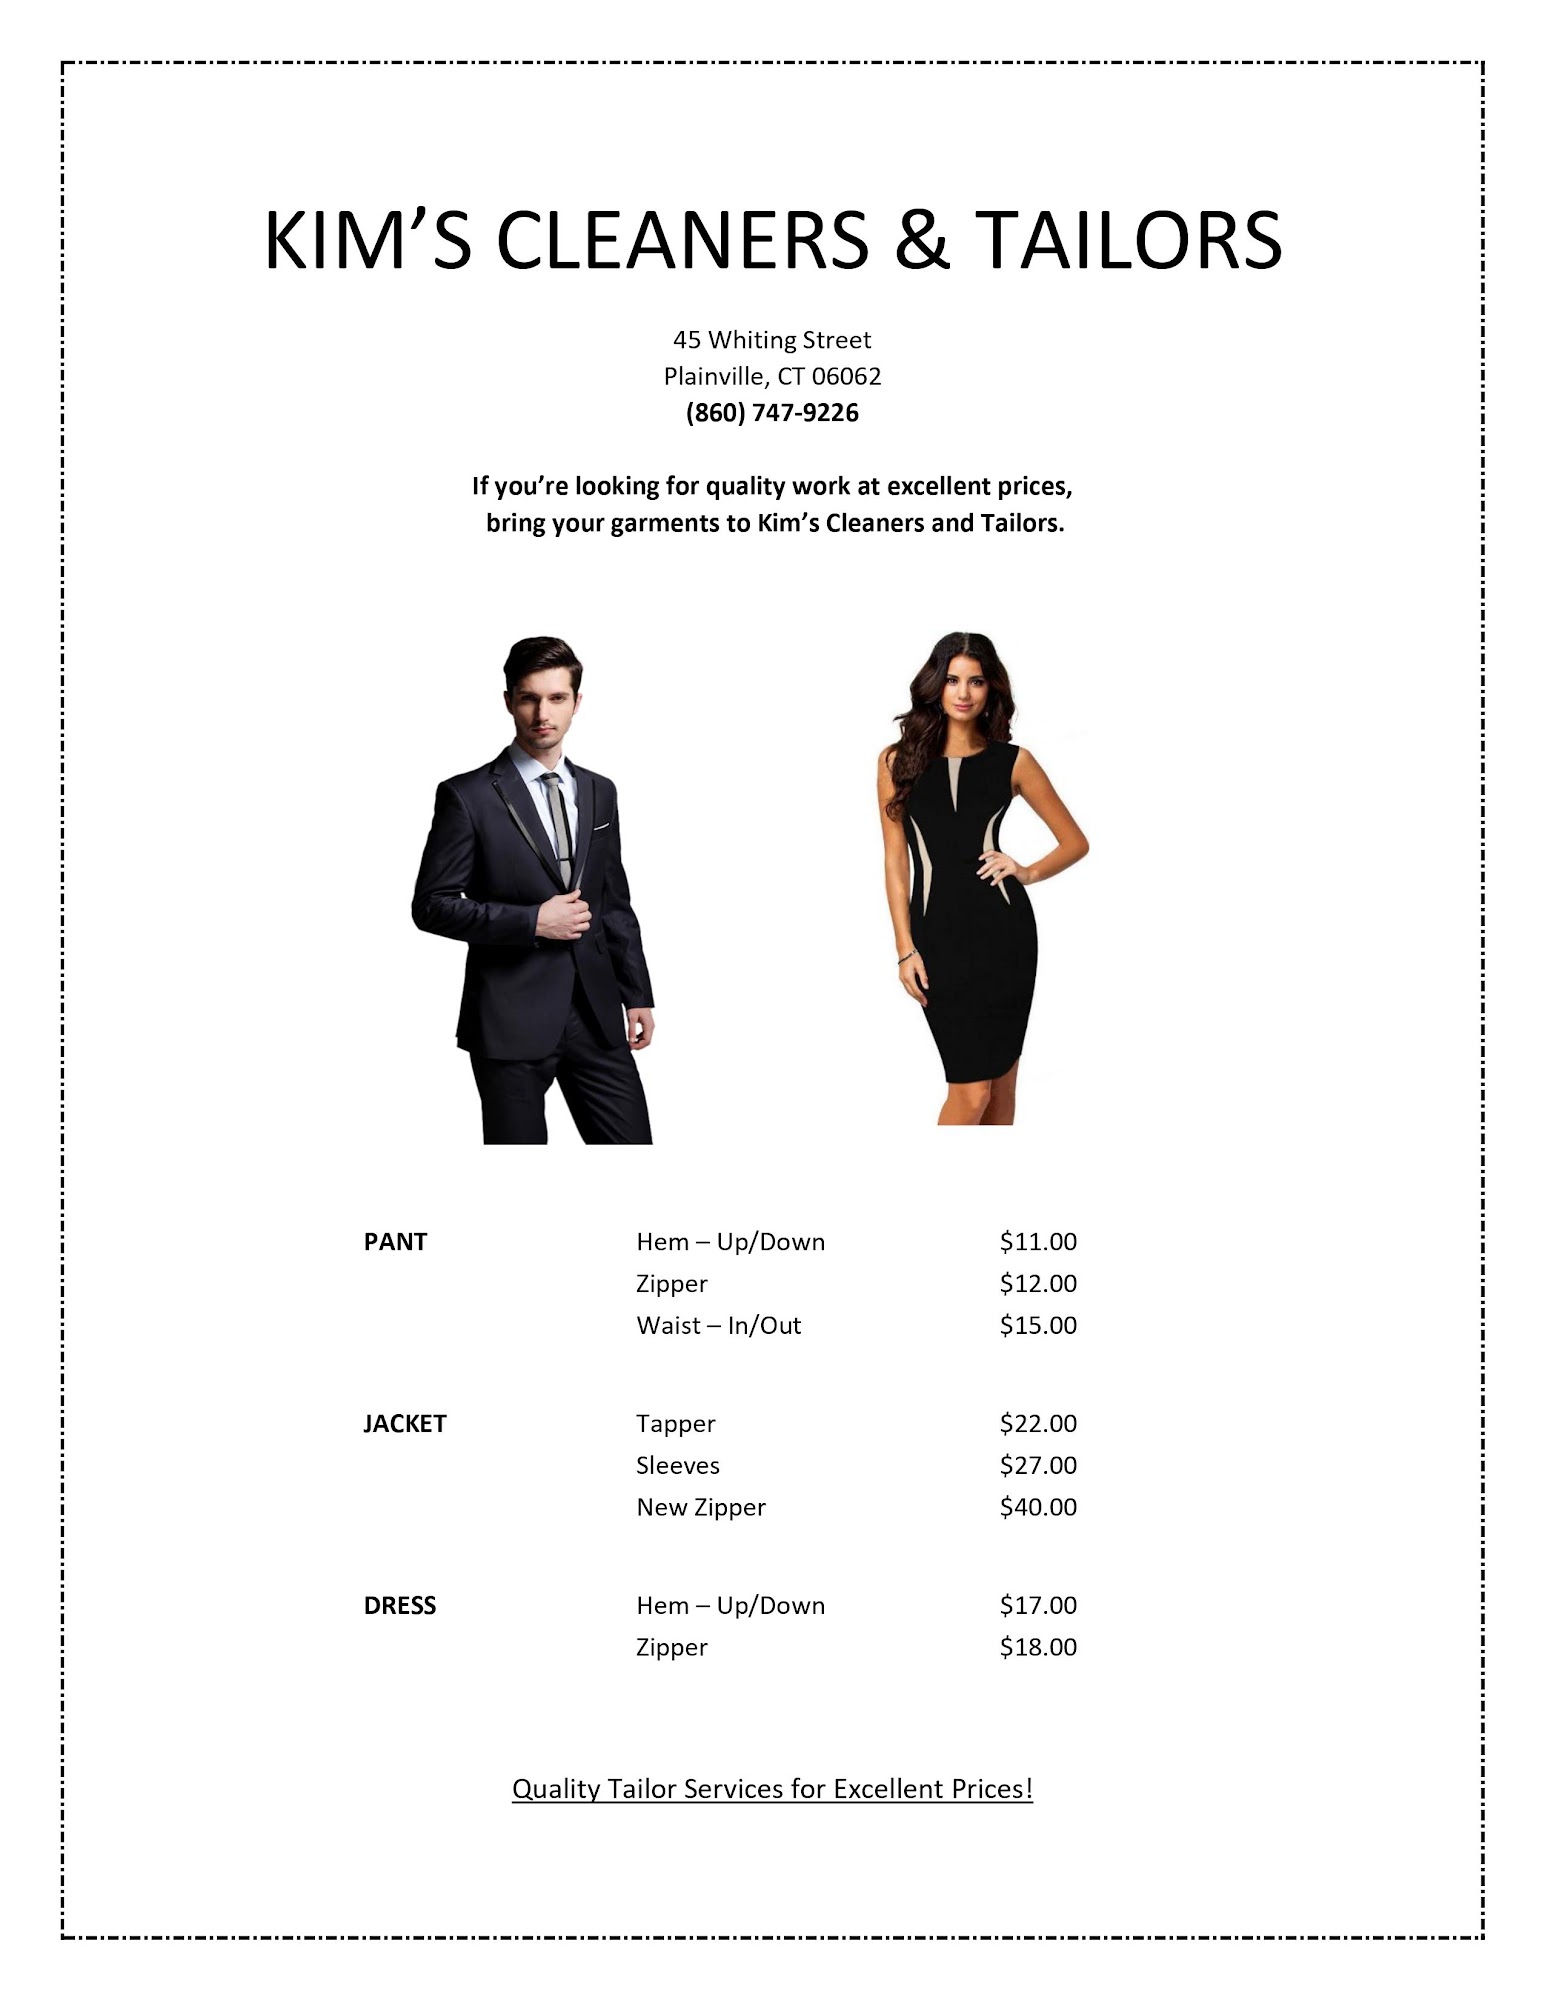 Kim's Cleaners